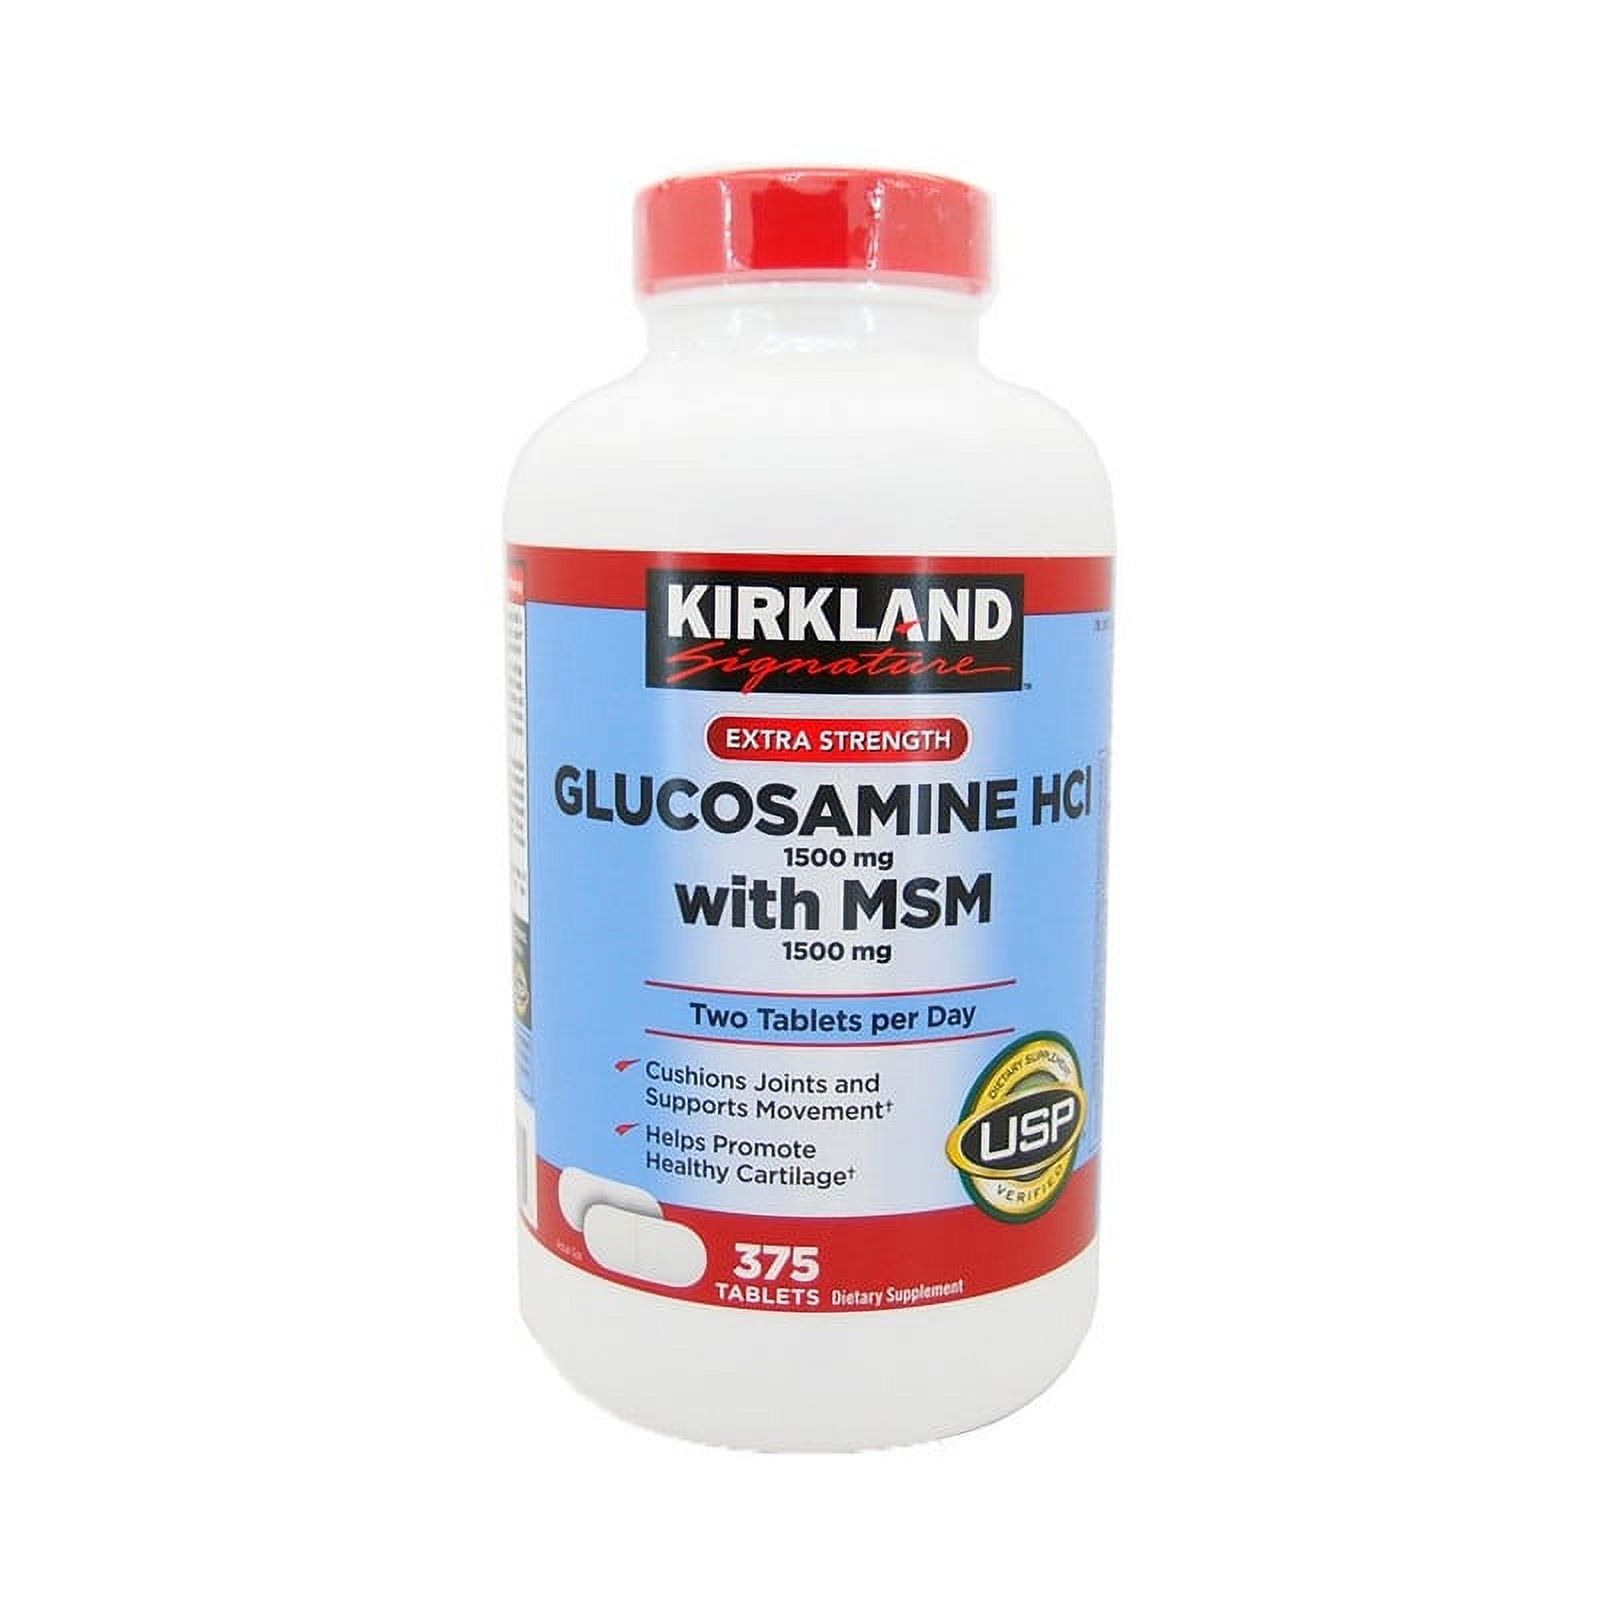 Kirkland Signature Glucosamine HCI with MSM - 375 Tablets - image 1 of 3